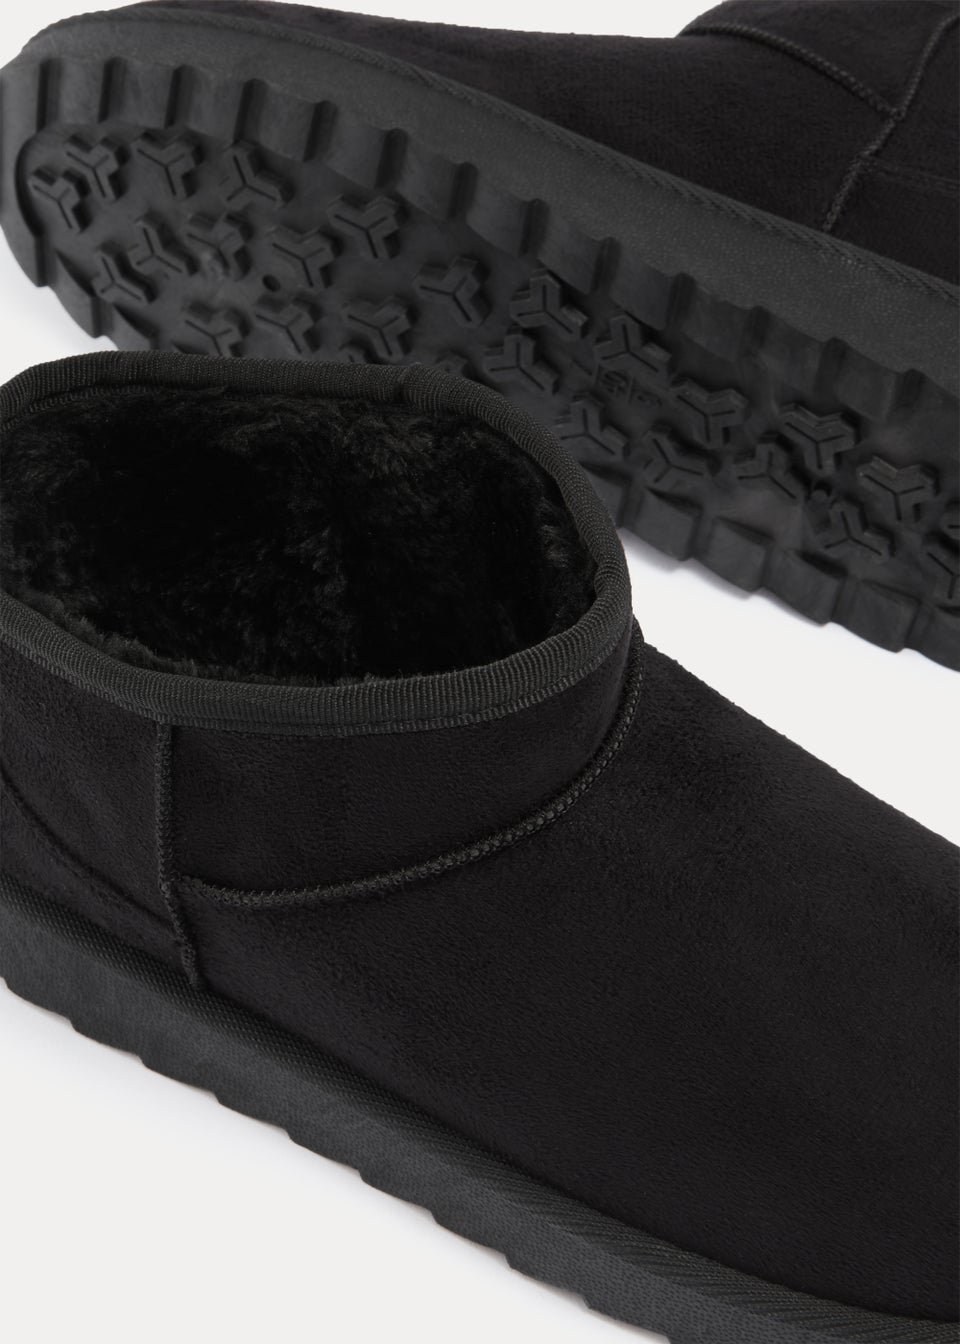 Black Snug Boots